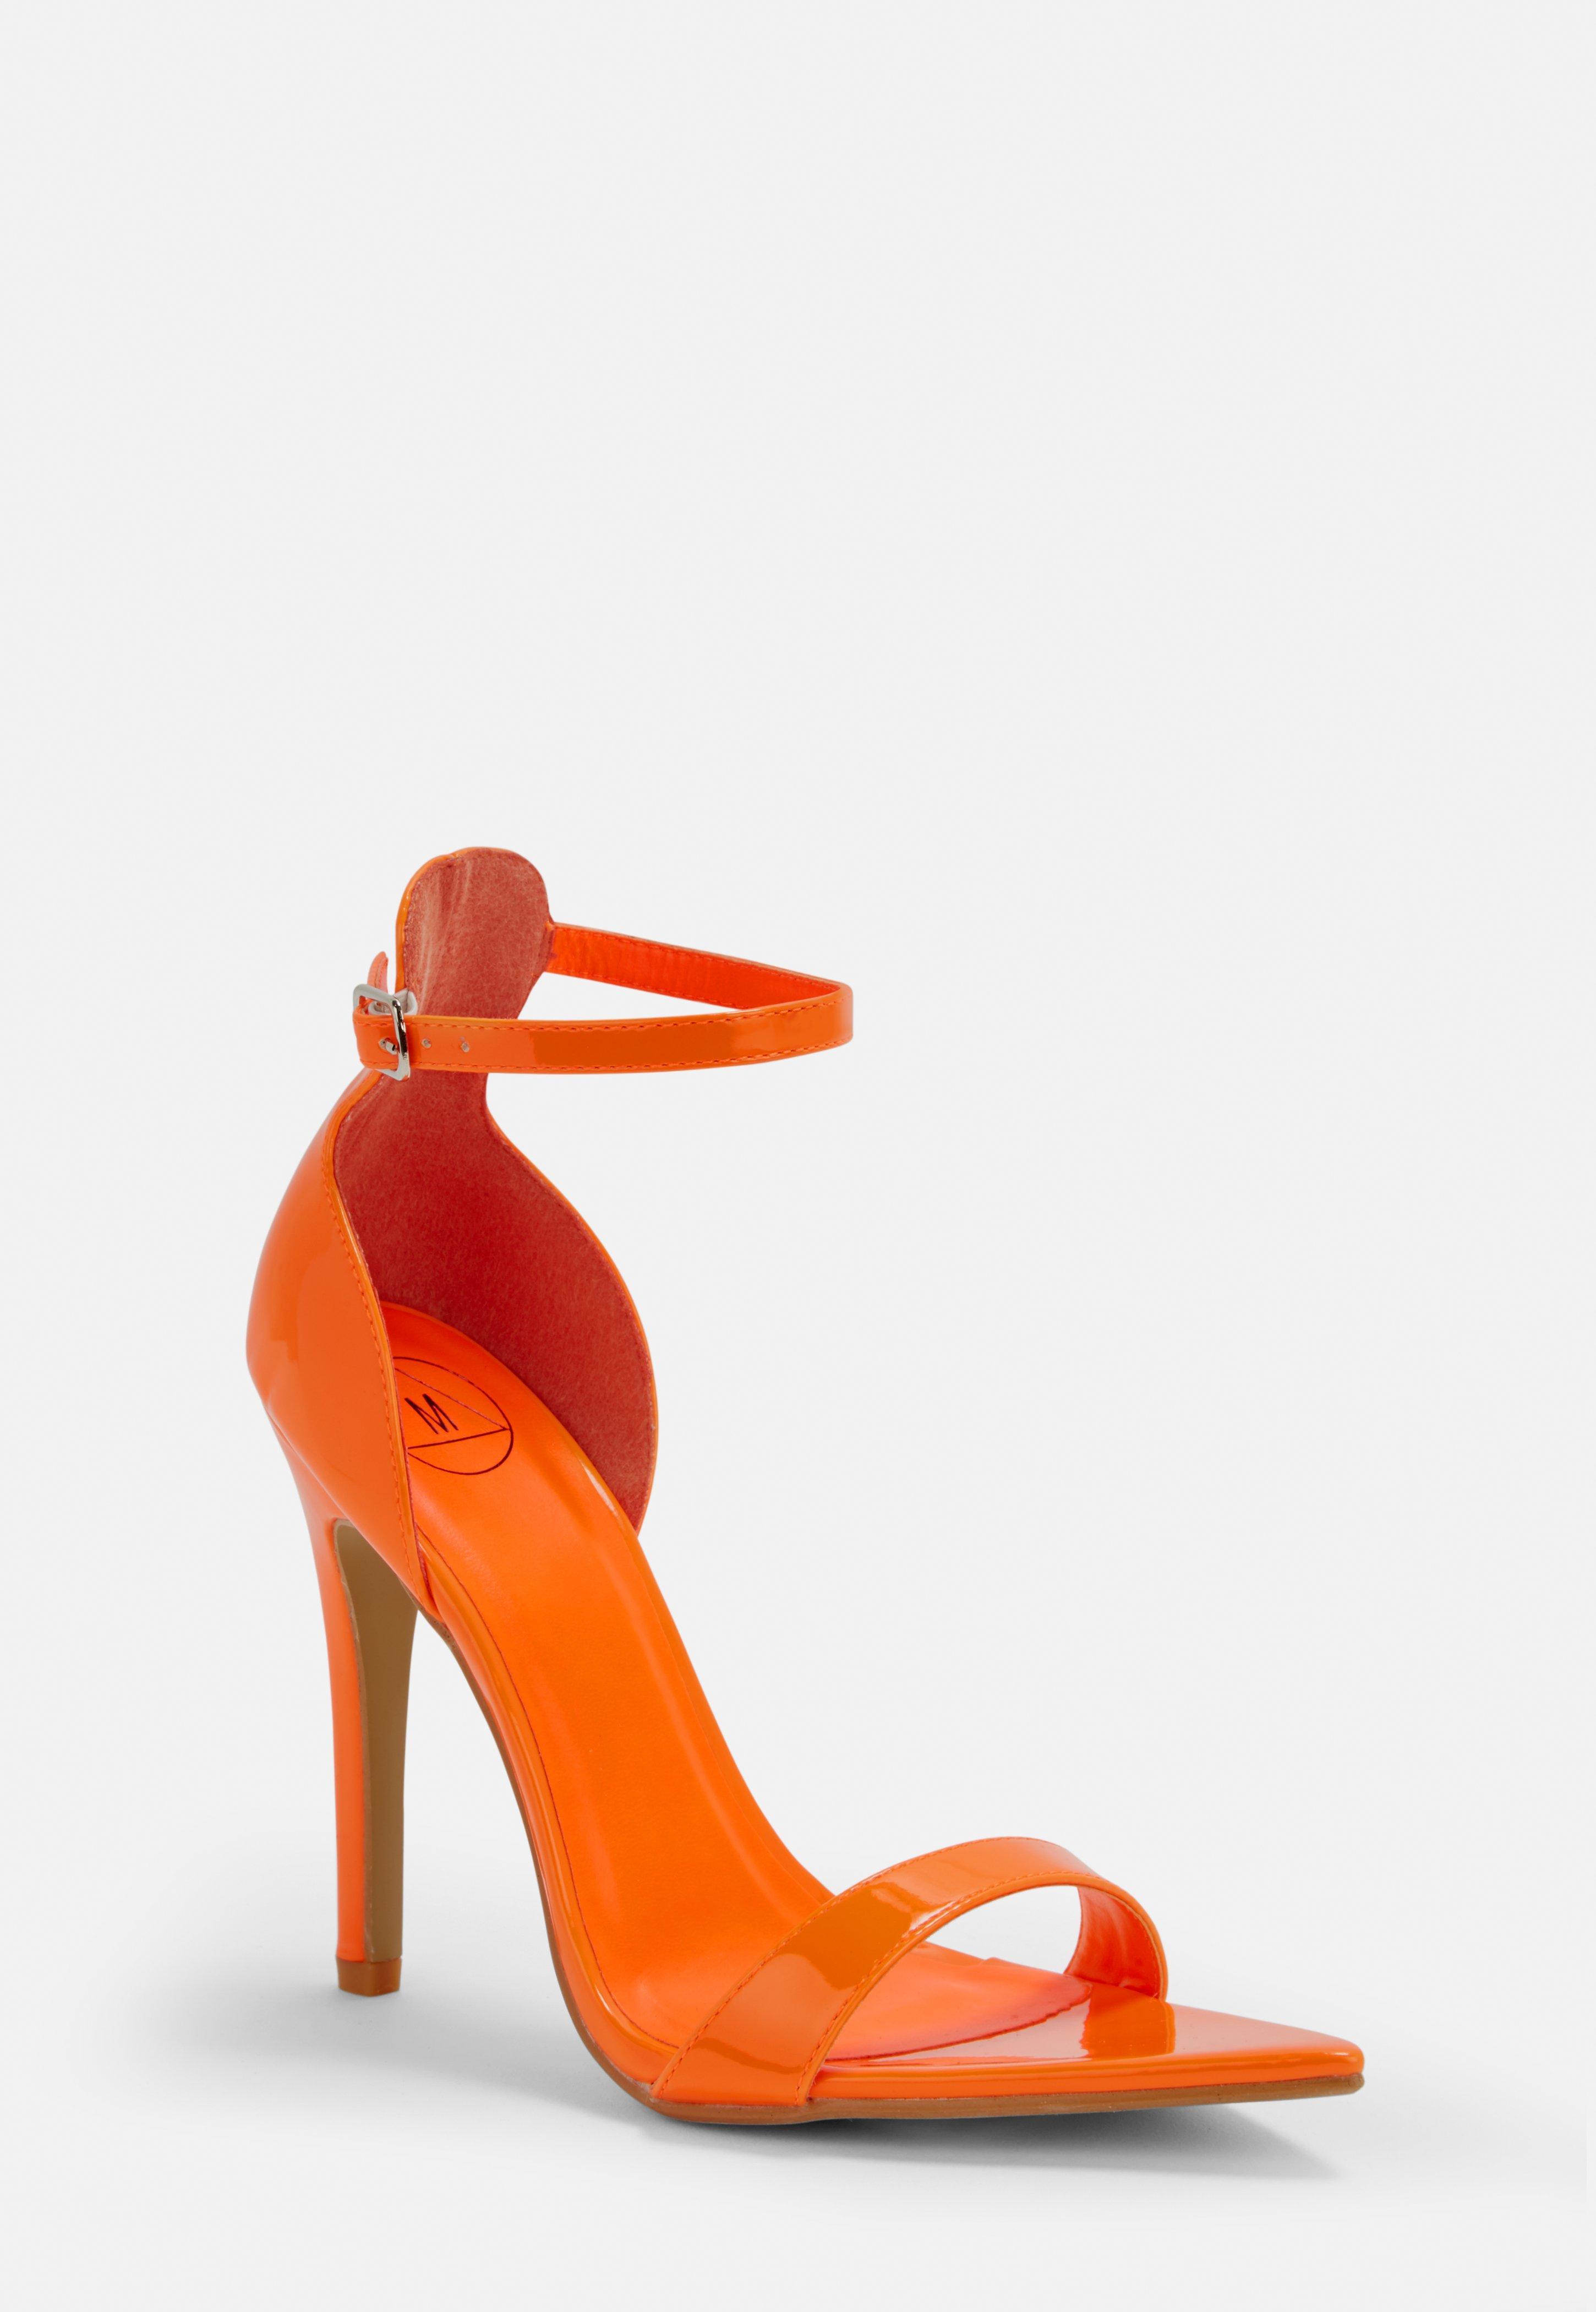 Buy > bright orange high heels > in stock